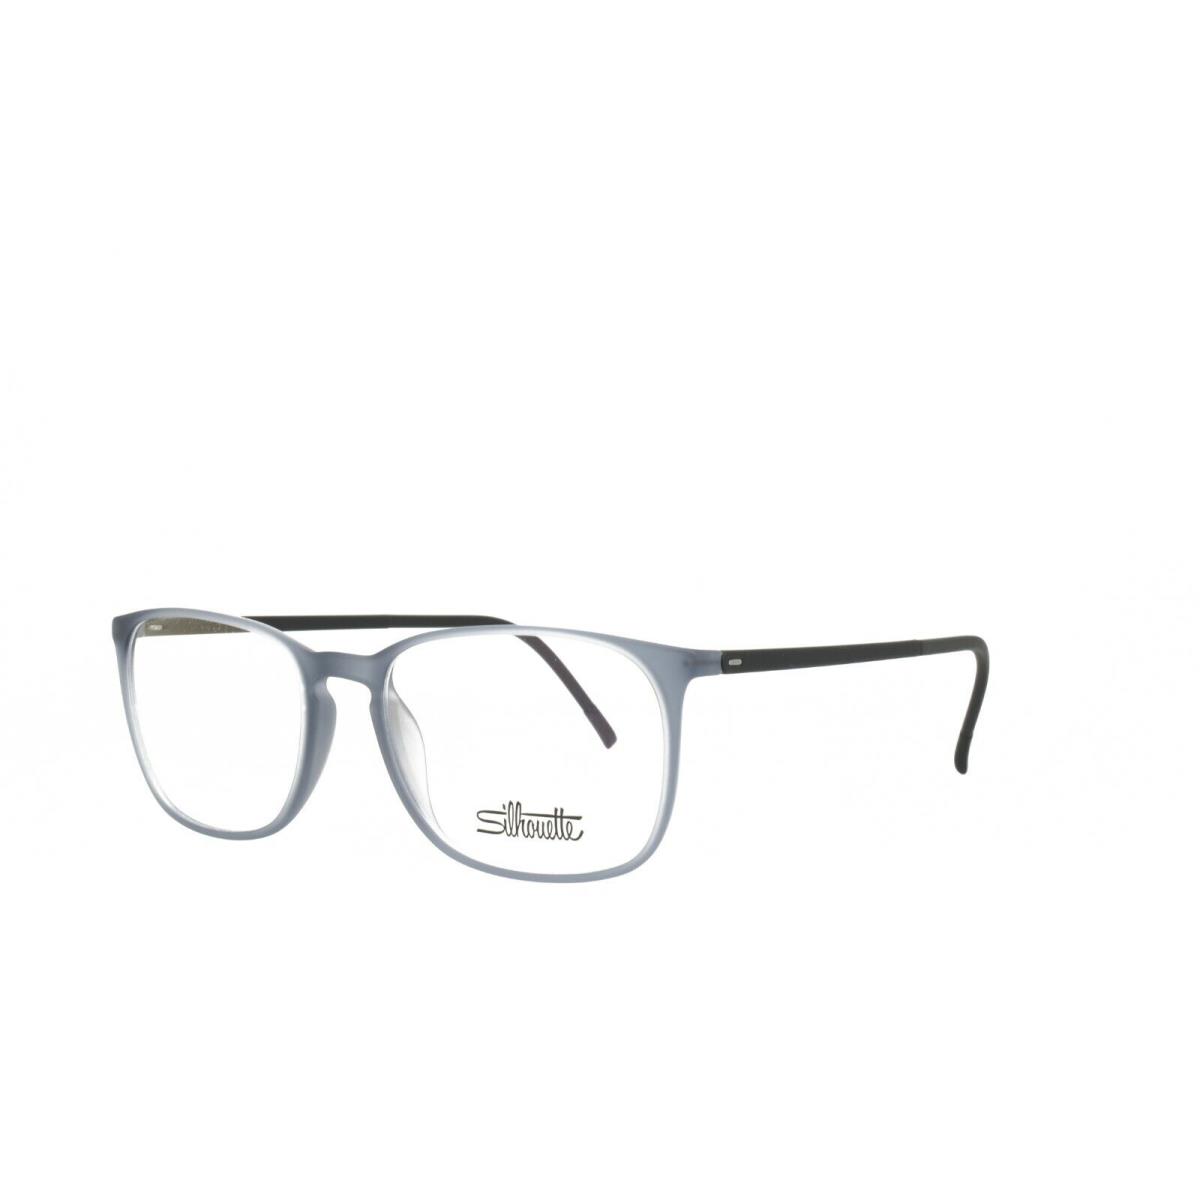 Silhouette Spx Illusion 2911 75 6510 Eyeglasses 53-17-140 Blue-grey